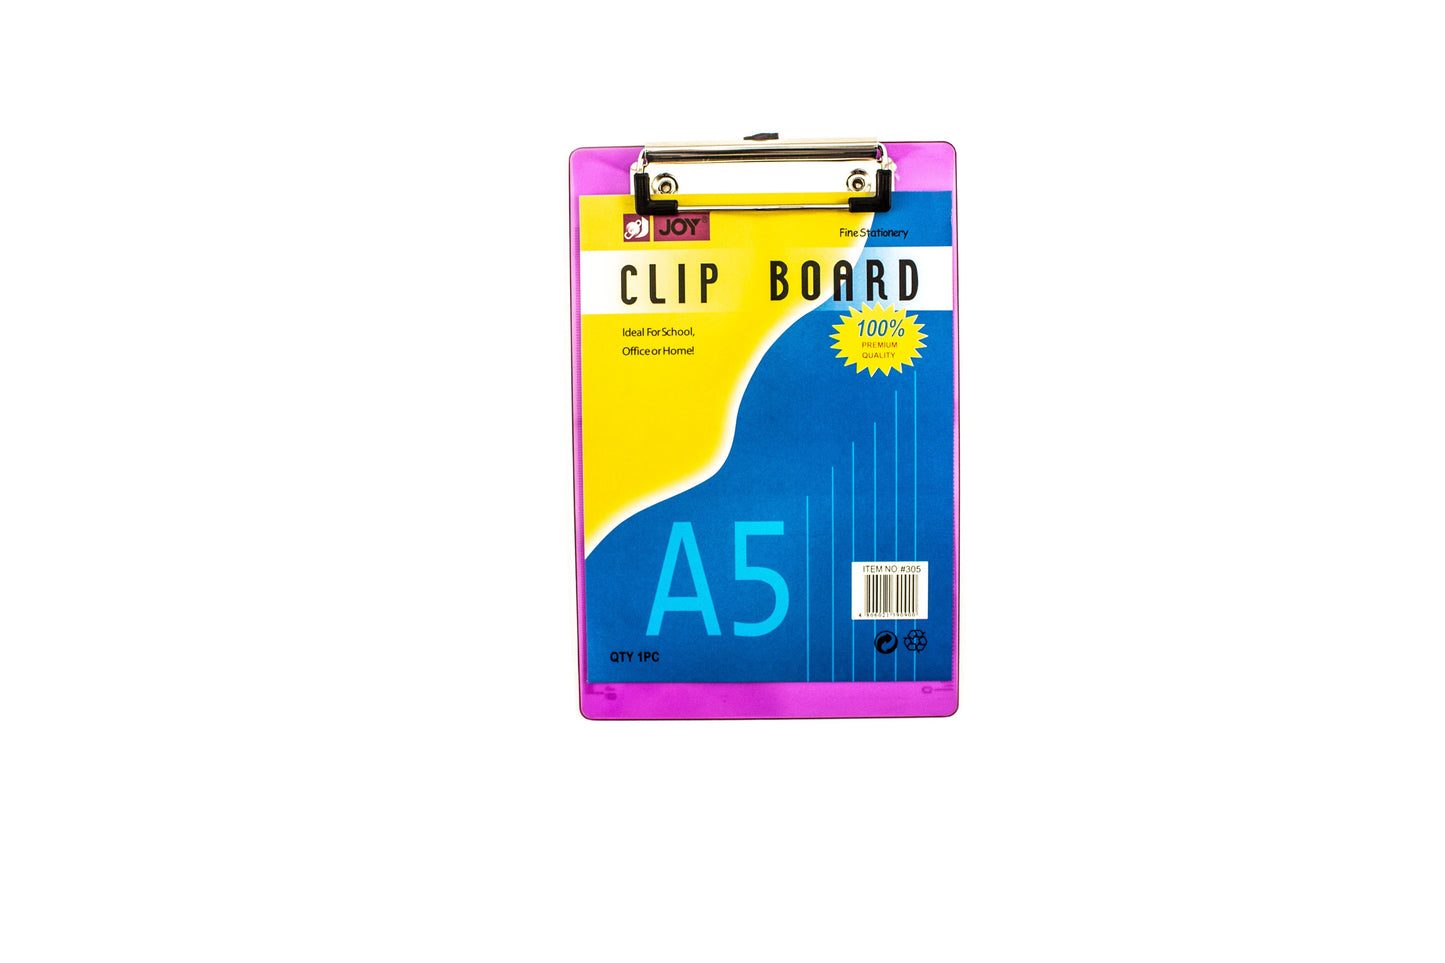 Joy Acrylic Clipboard 305 A5